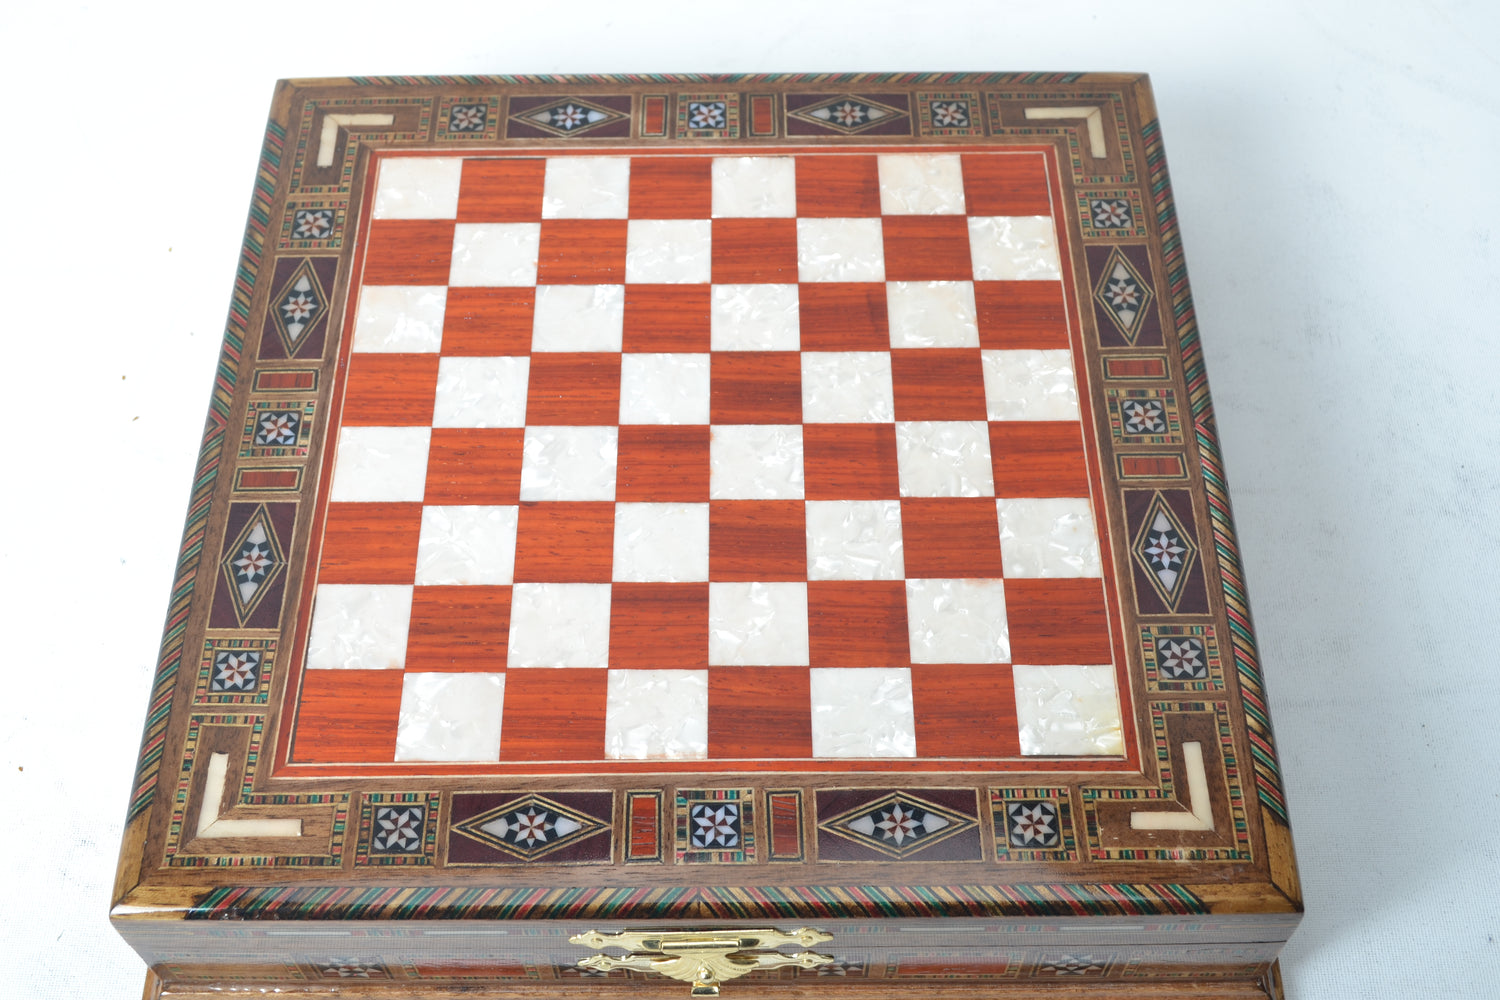 Handmade Chess Set: Elegant Wood with Metal Pieces - Ketohandcraft